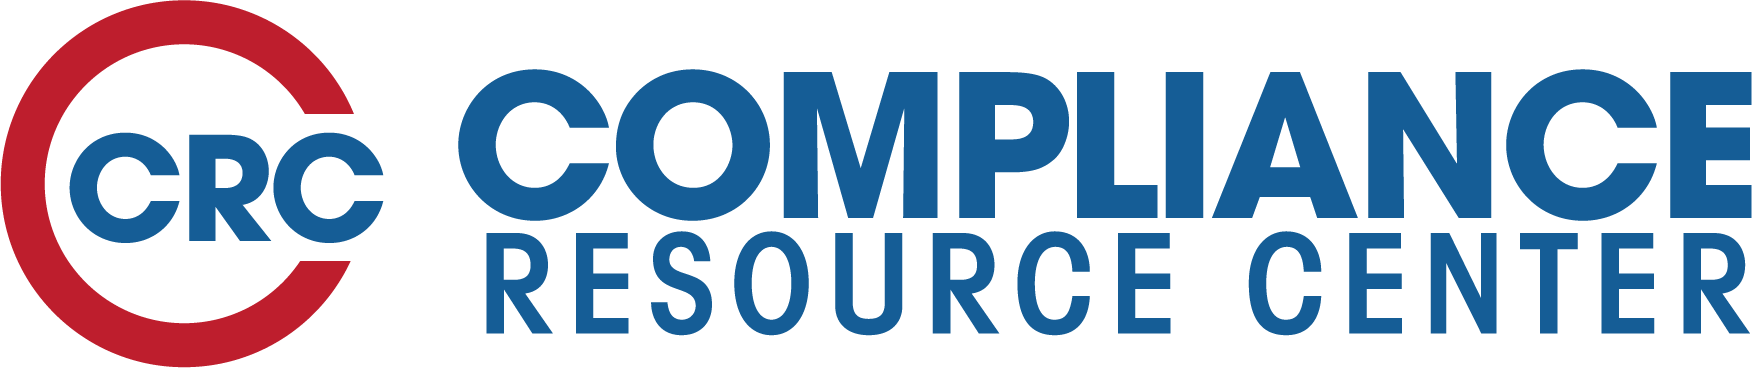 Compliance Resource Center Logo